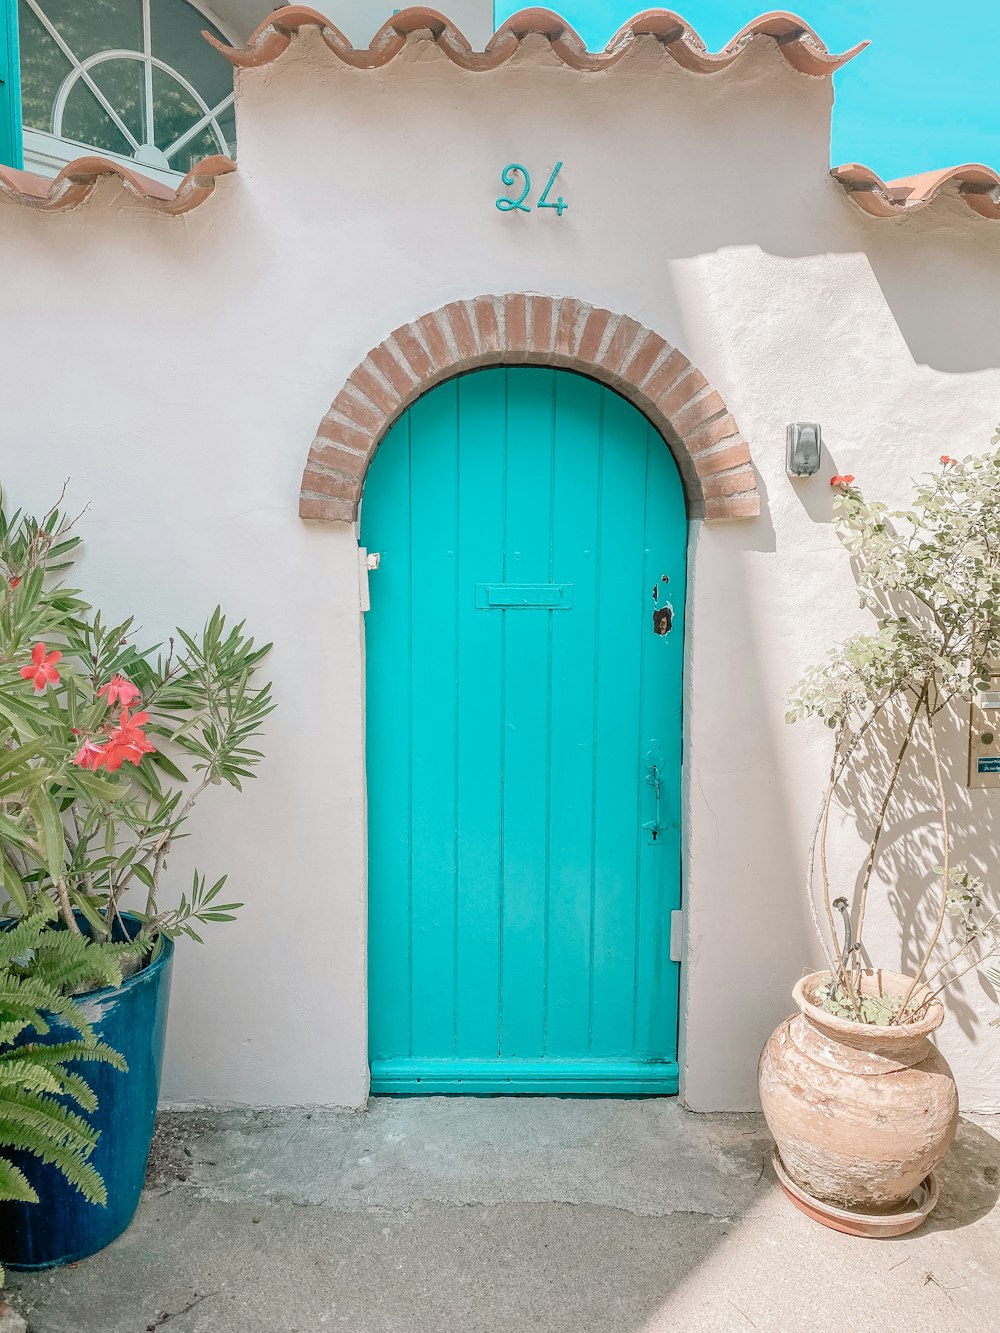 puerta de madera azul junto a una planta en maceta verde